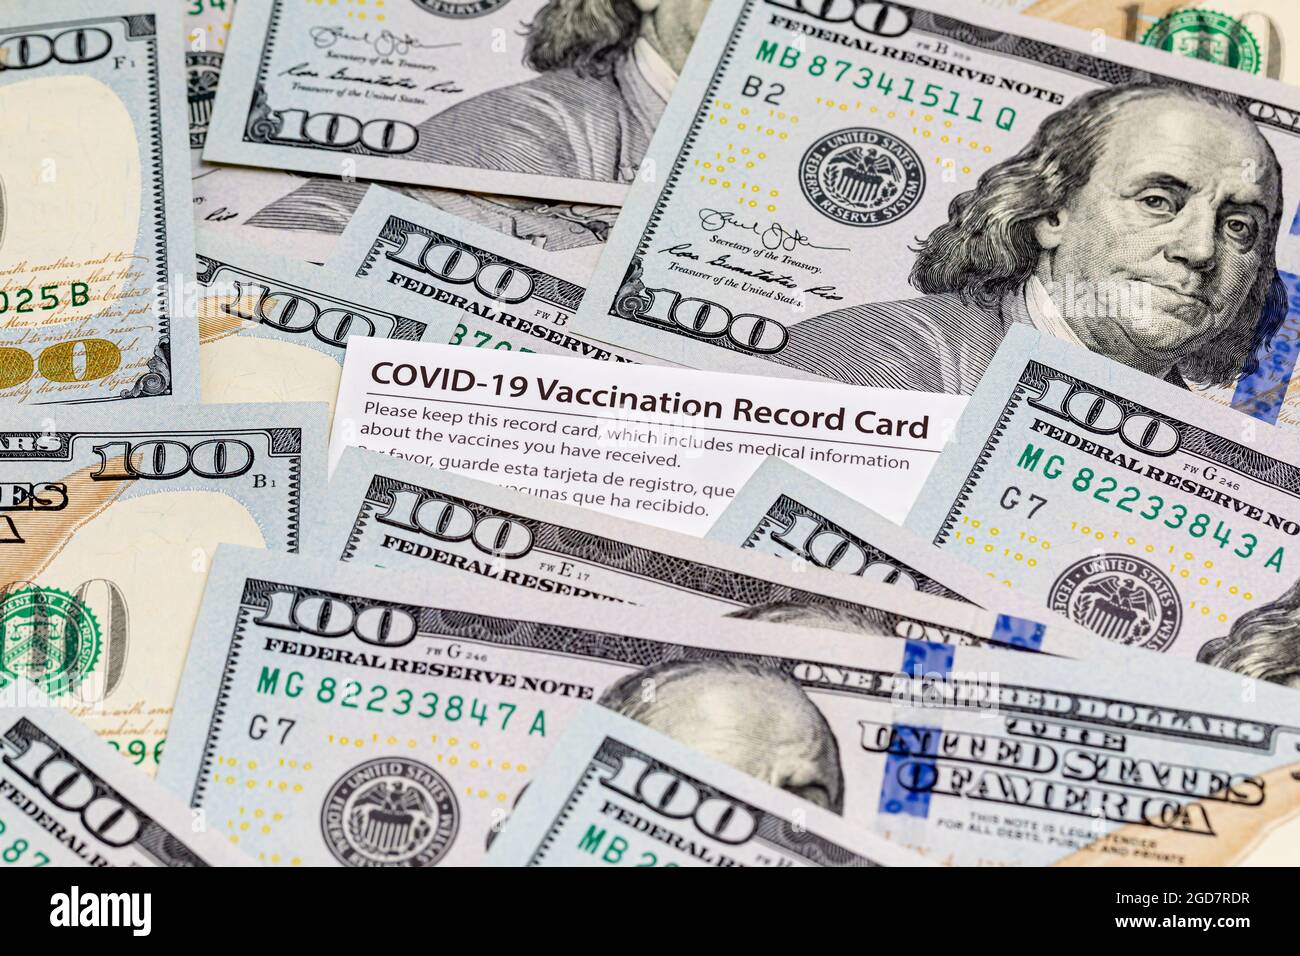 Covid-19 vaccination card and cash money. Covid vaccine lottery, bonus and incentive concept Stock Photo